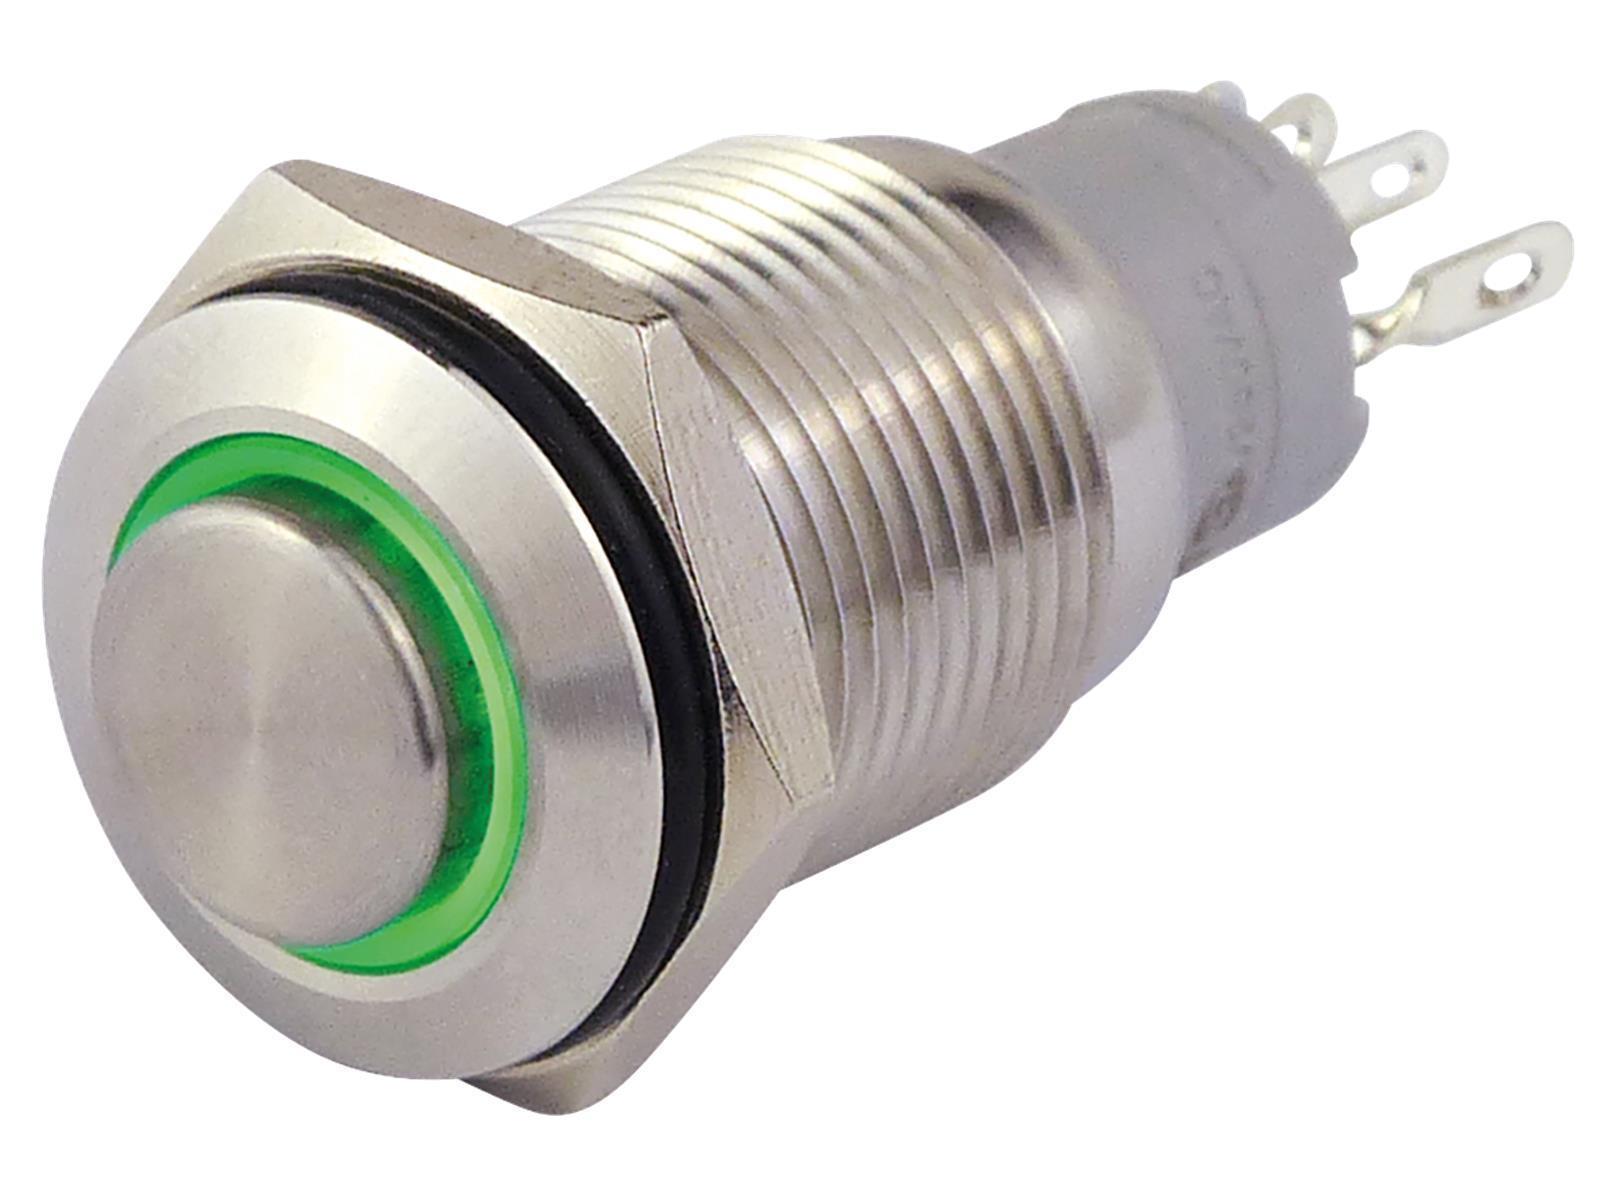 Vollmetalltaster mit Ringbeleuchtung, grün, 16mm-Ø, 250V, 3A, Lötanschluss